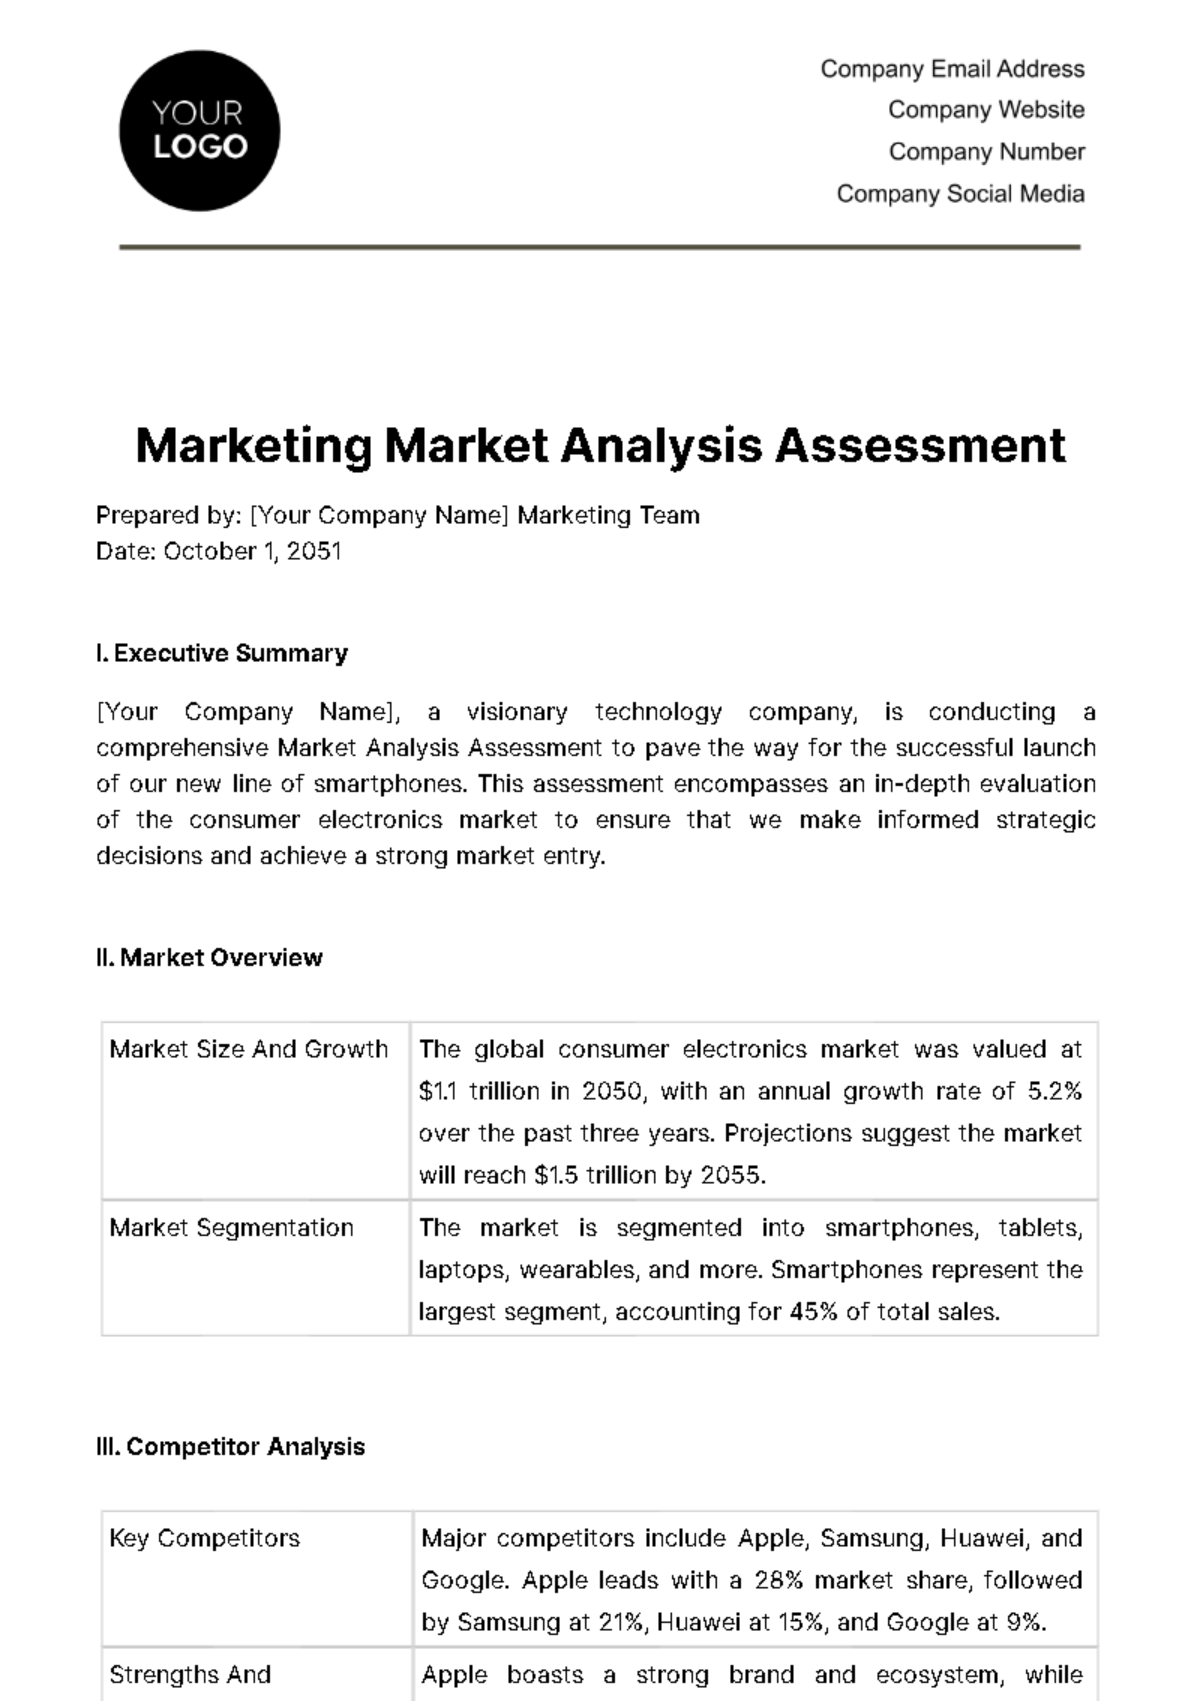 Marketing Market Analysis Assessment Template